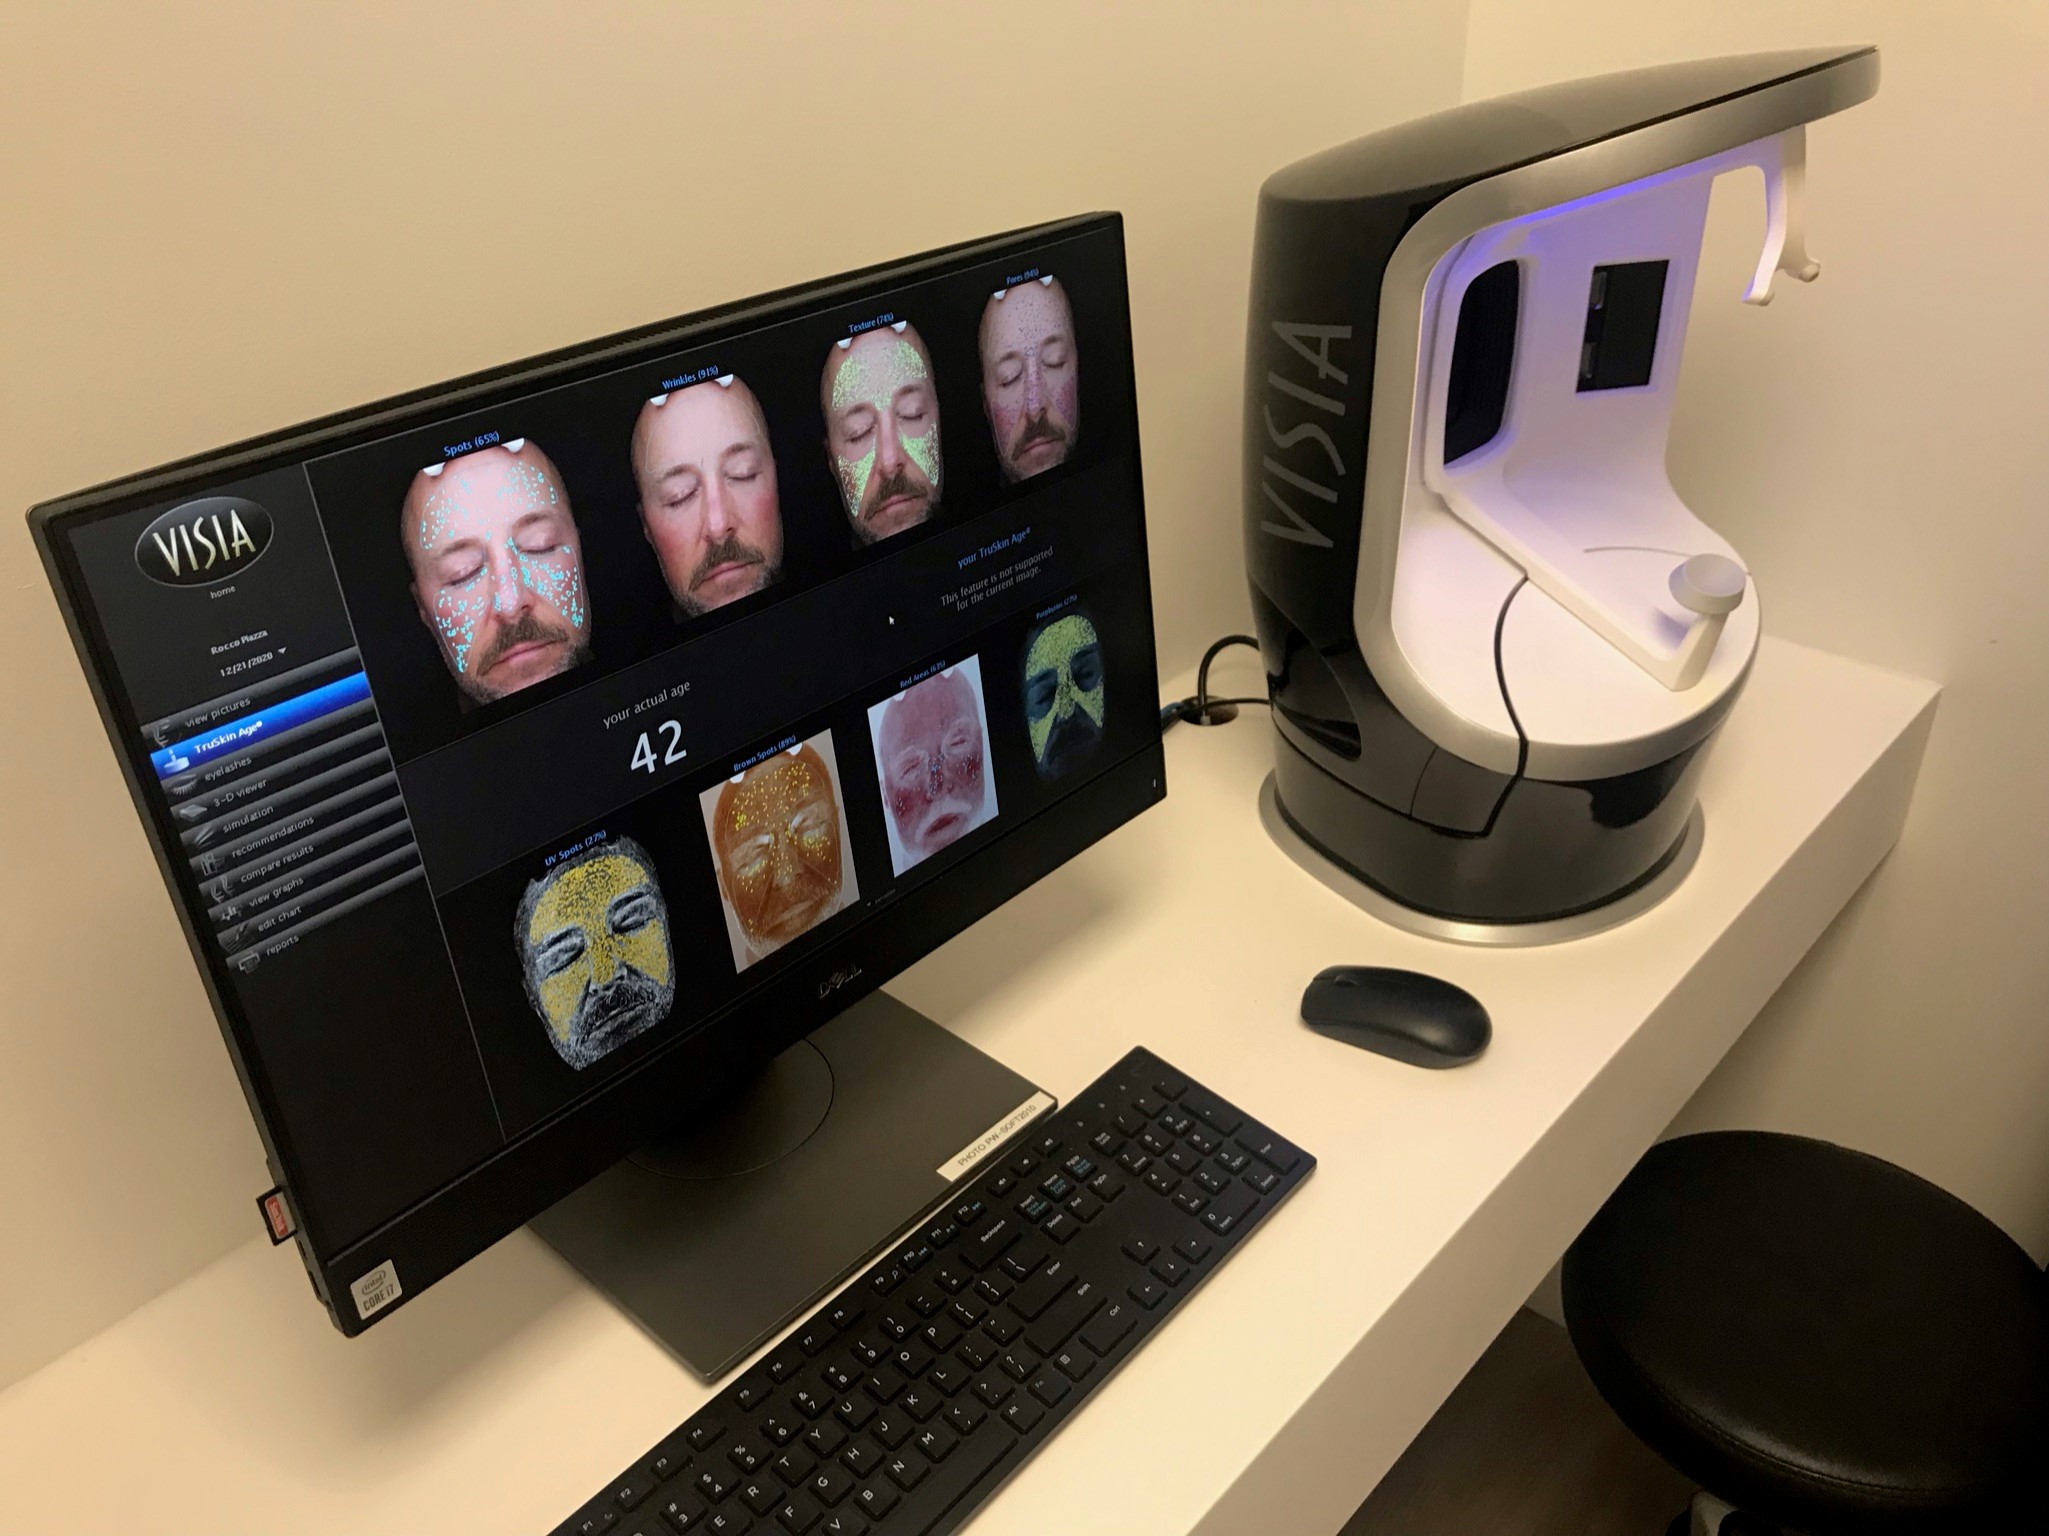 VISIA Skin Analysis system displaying Dr. Piazza's skin assessment